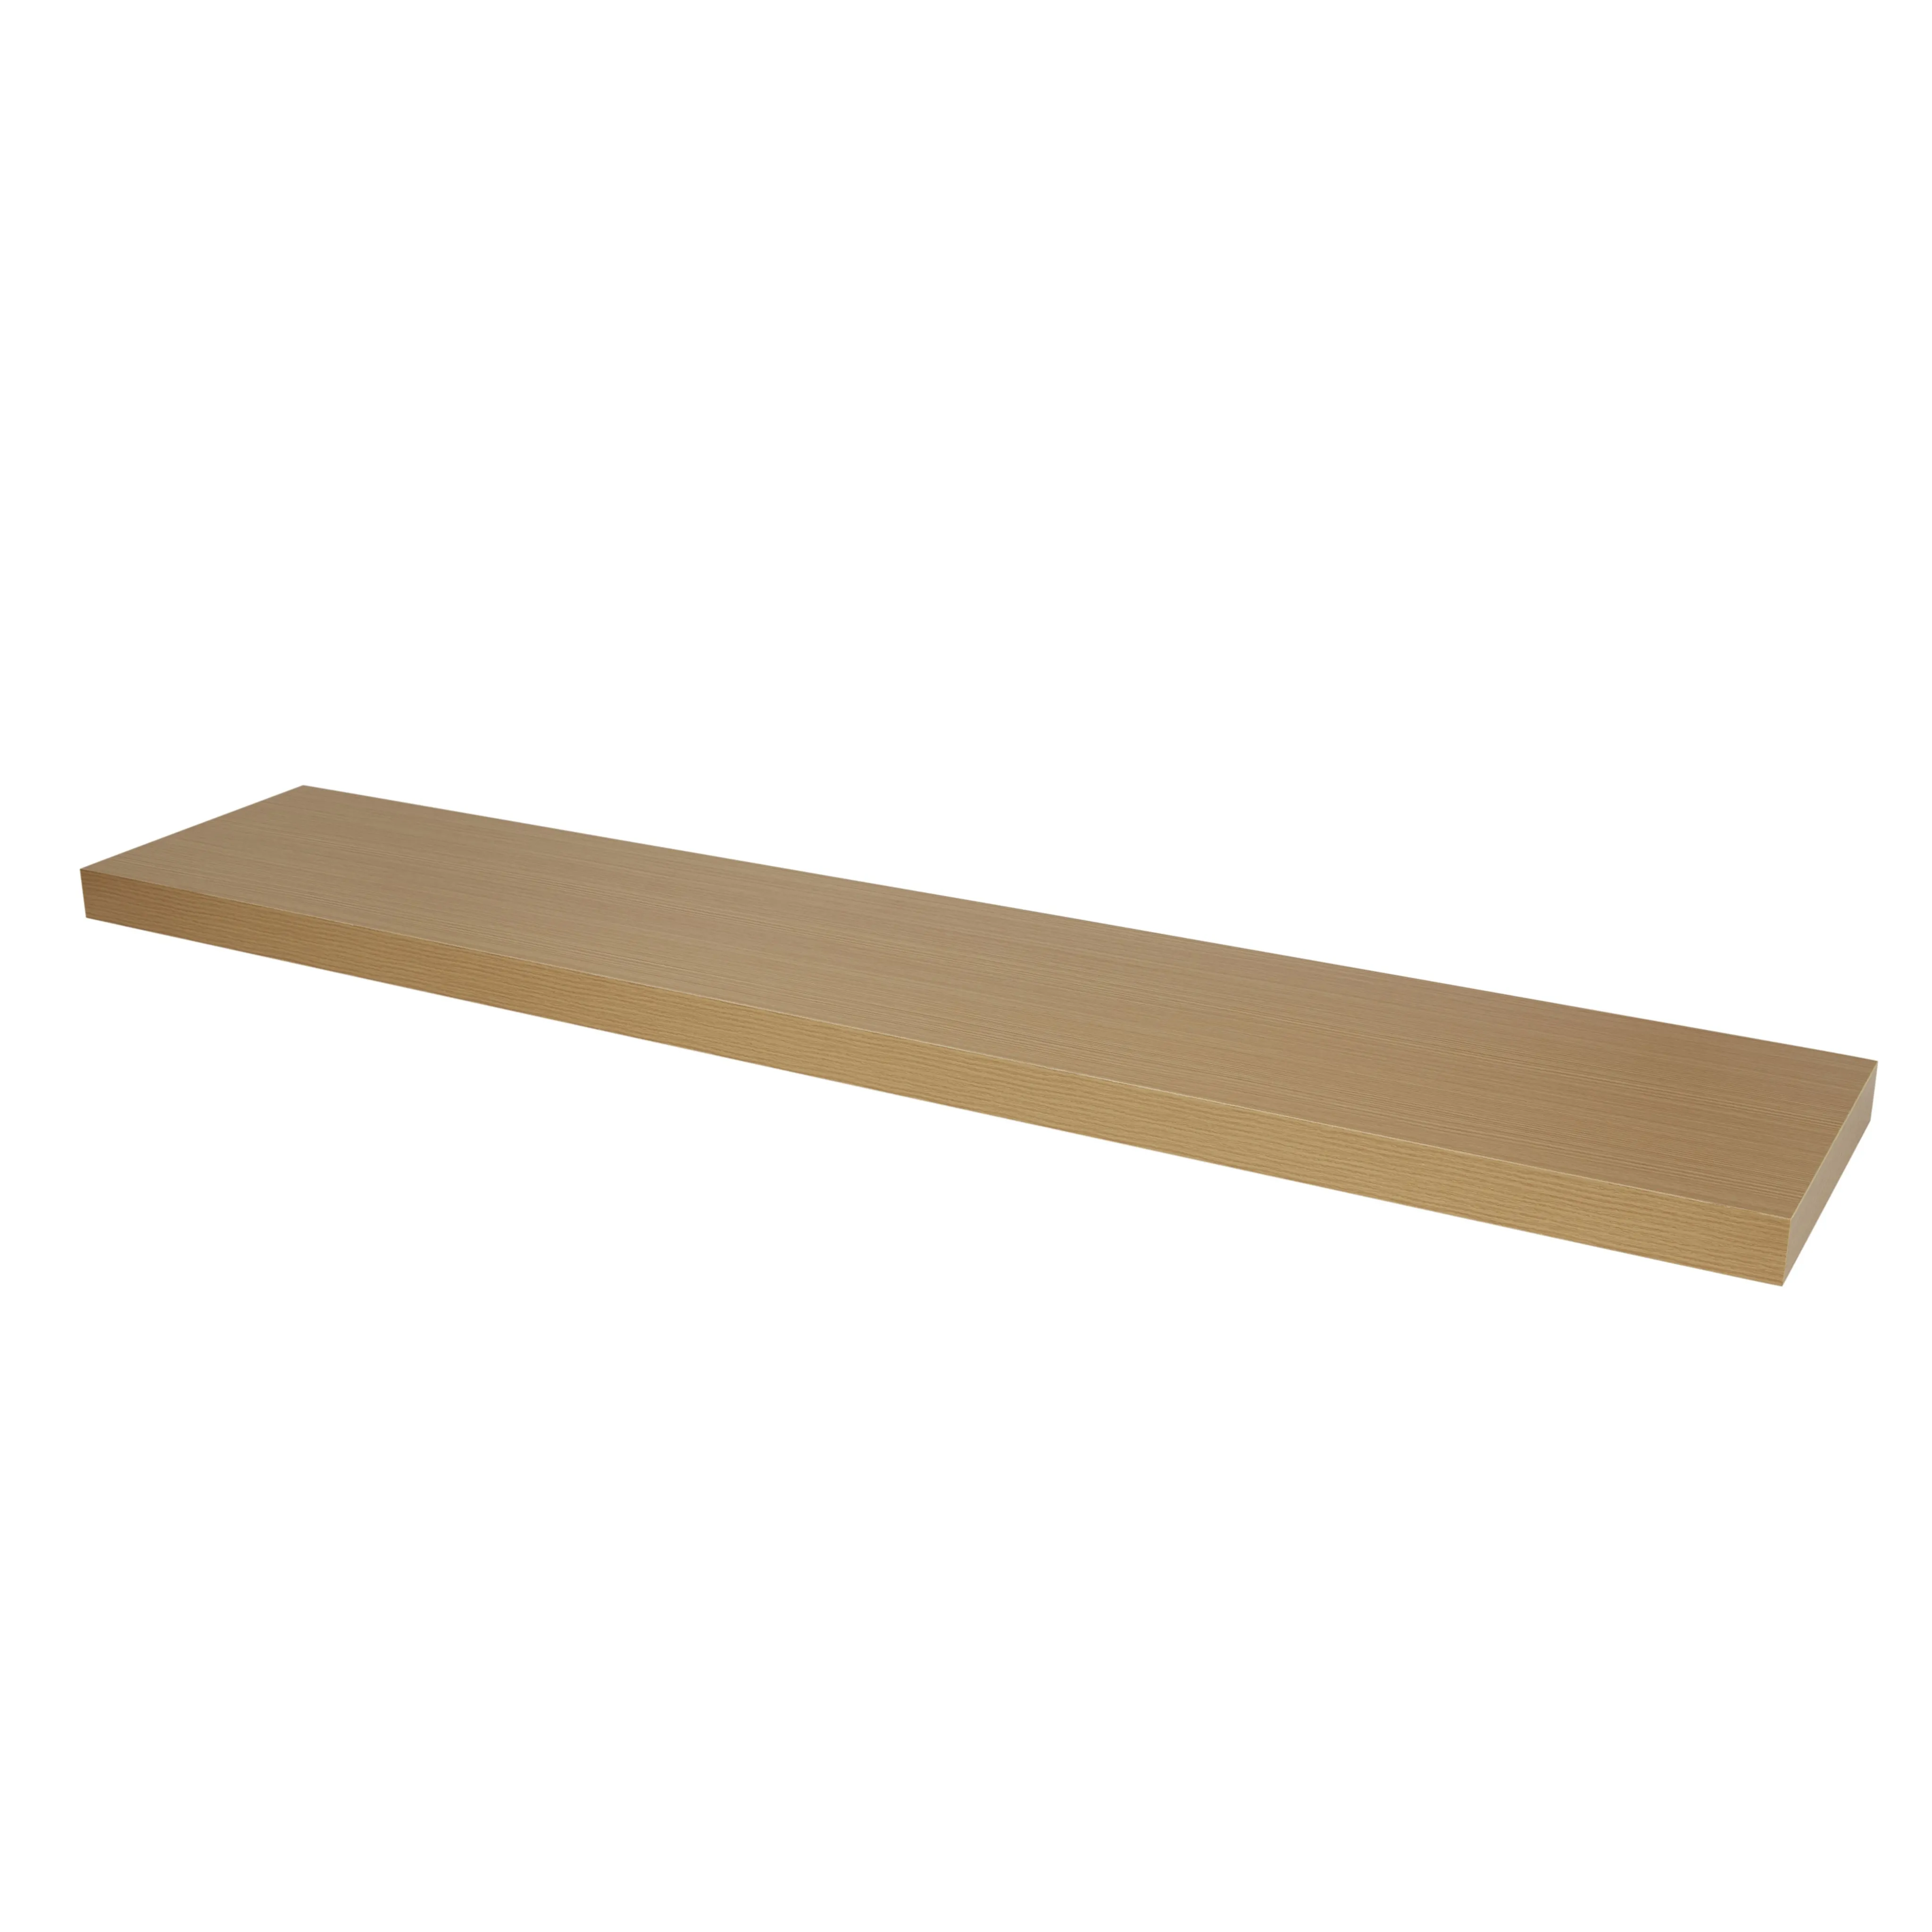 Form Cusko Yellow Floating shelf (L)1180mm (D)235mm